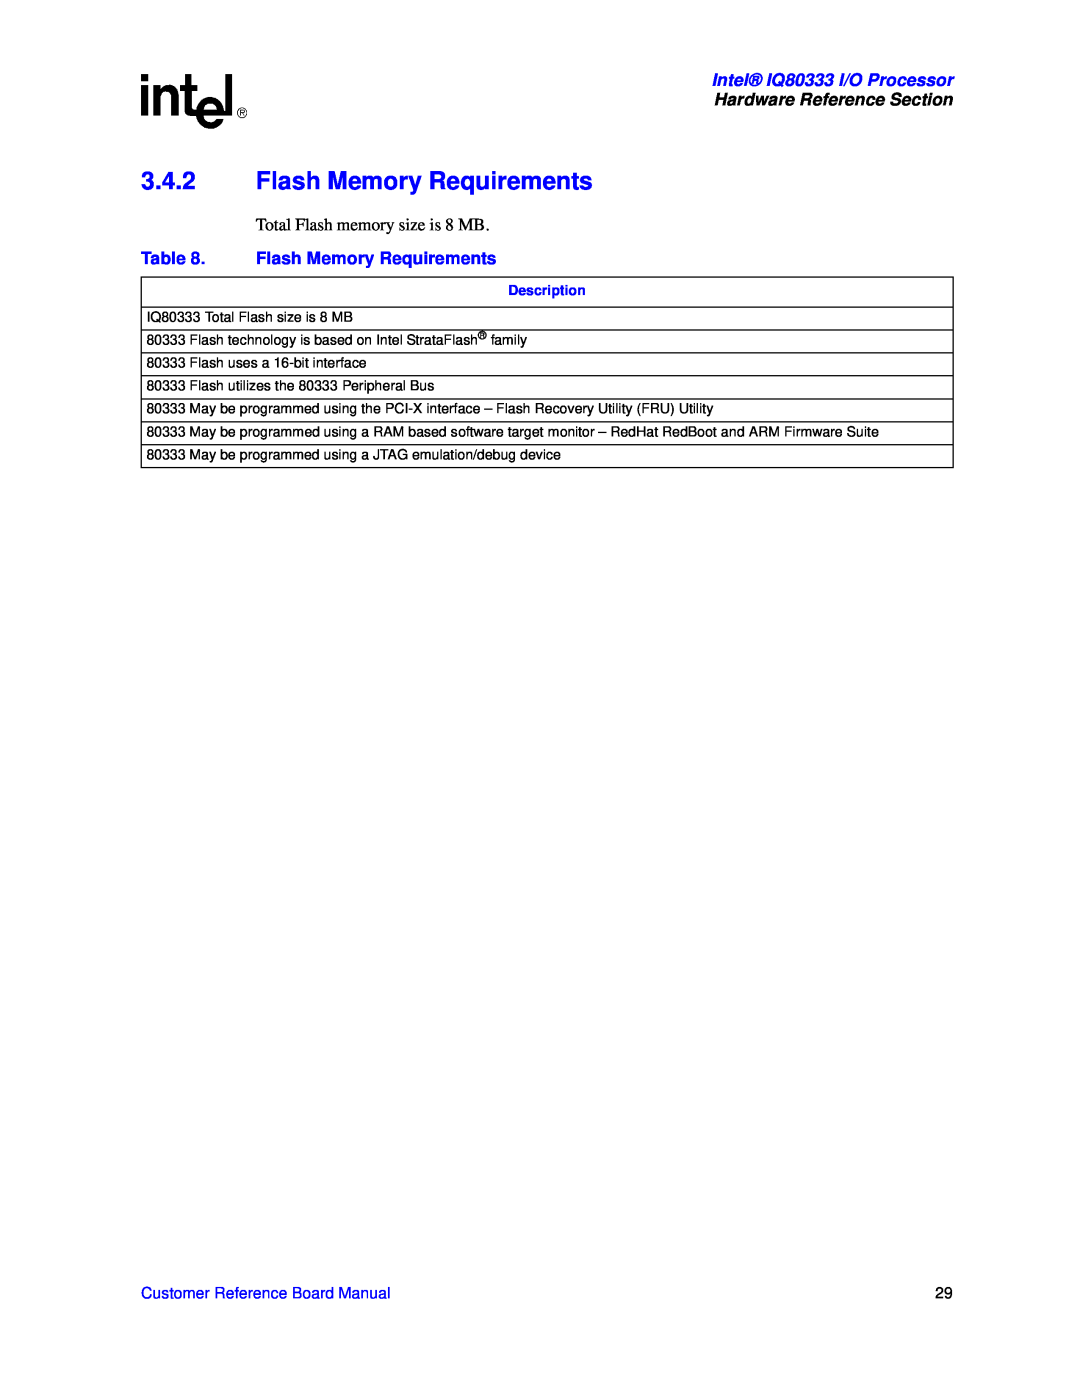 Intel manual 3.4.2Flash Memory Requirements, Intel IQ80333 I/O Processor, Hardware Reference Section, Description 